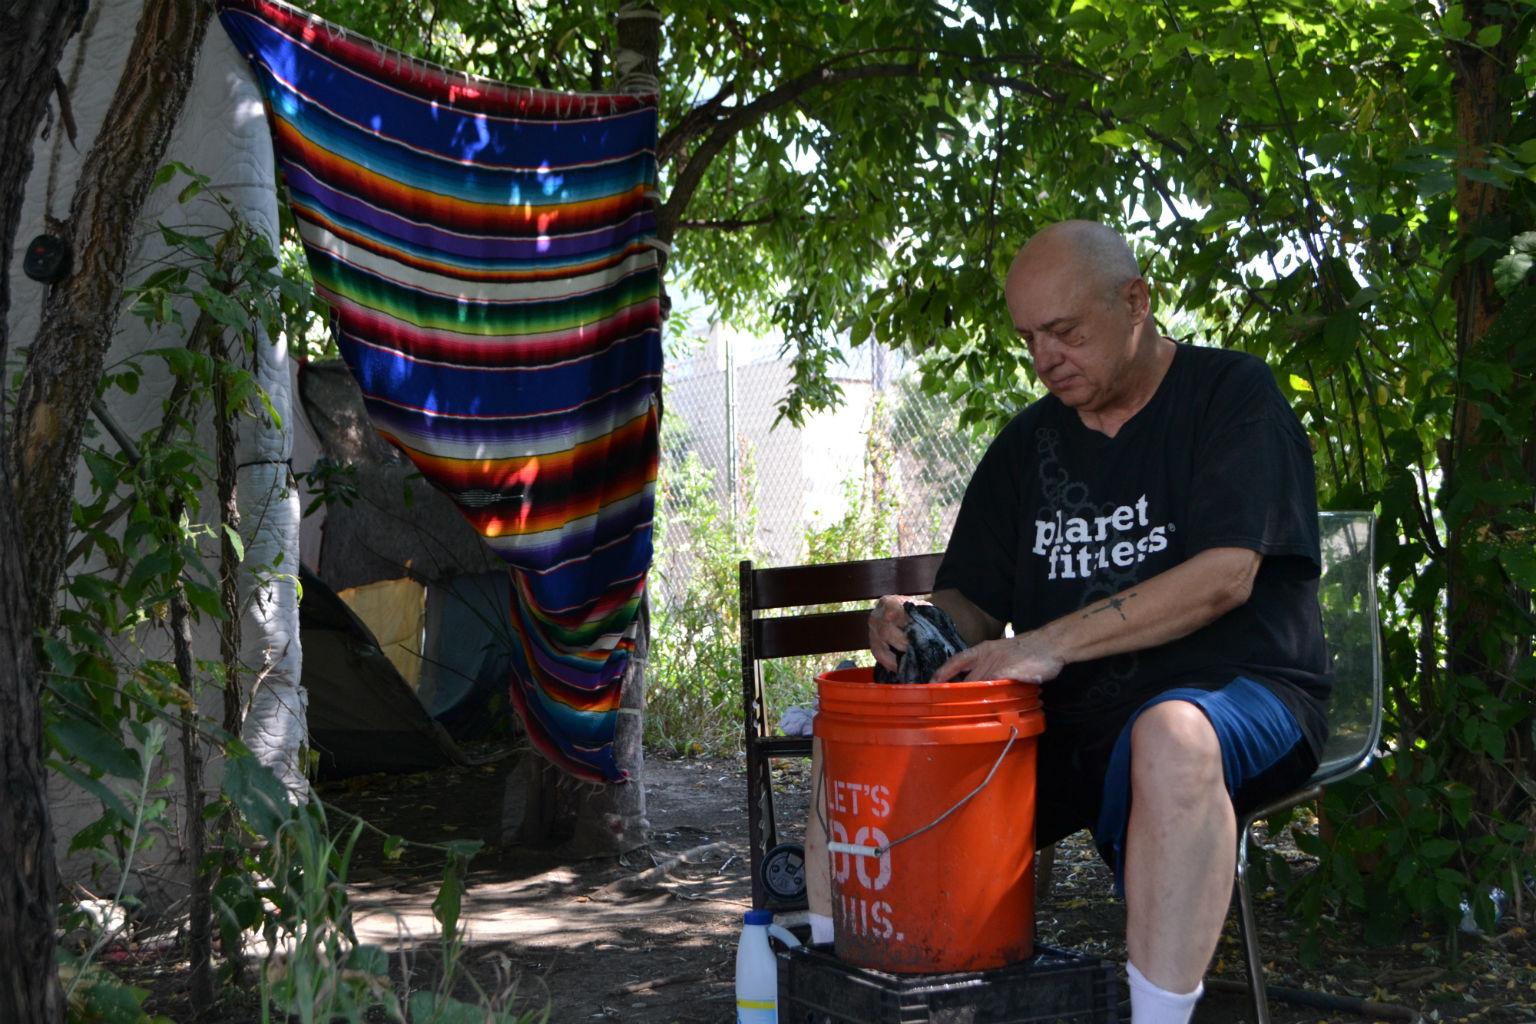 Don Gorobegko washes clothes Friday, Aug. 10, 2018, in a homeless encampment along DesPlaines Street. (Kristen Thometz / Chicago Tonight)